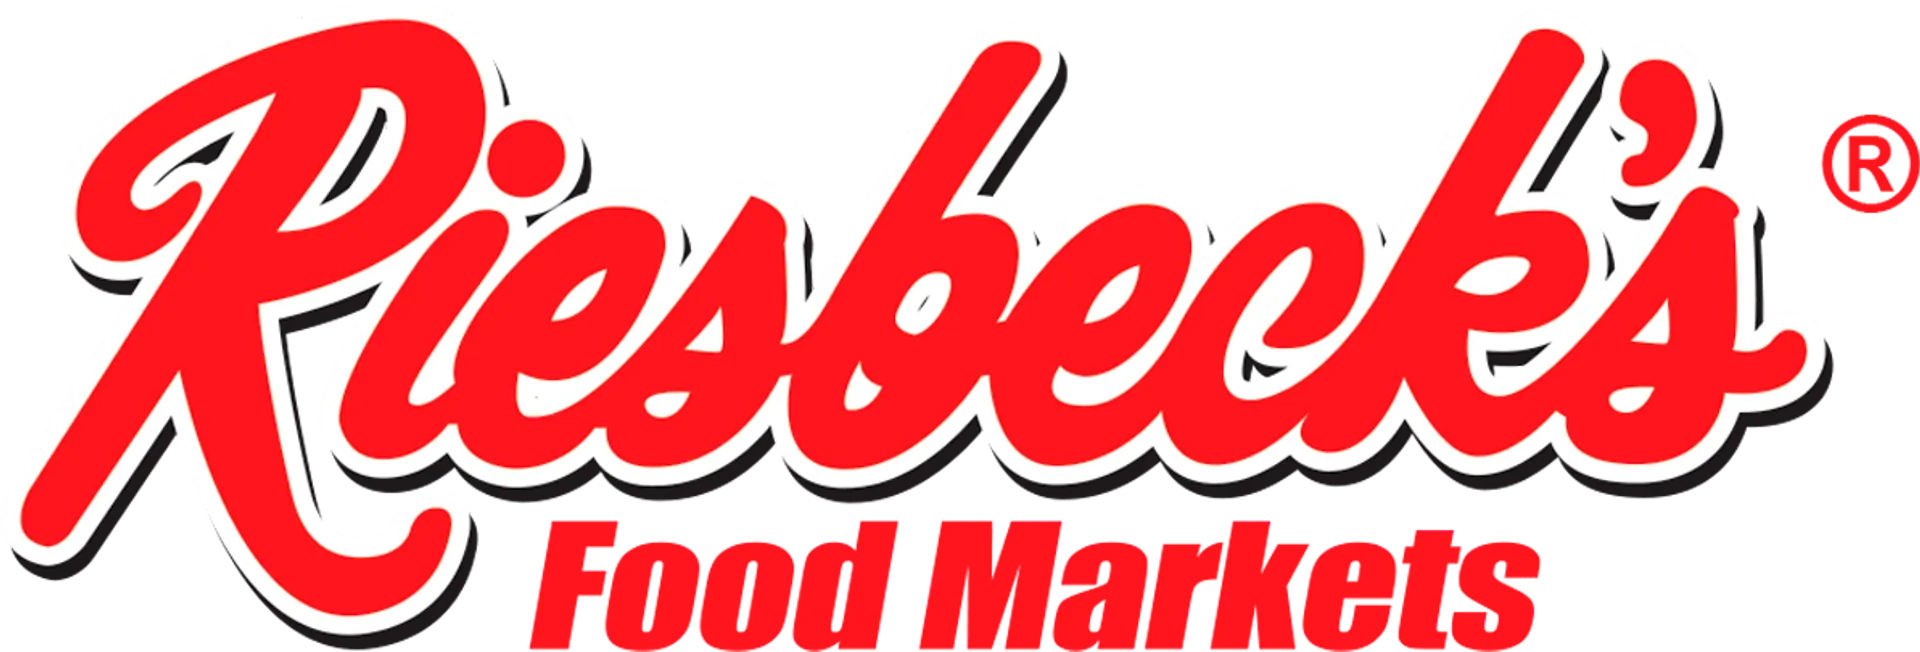 RIESBECK logo. Current weekly ad